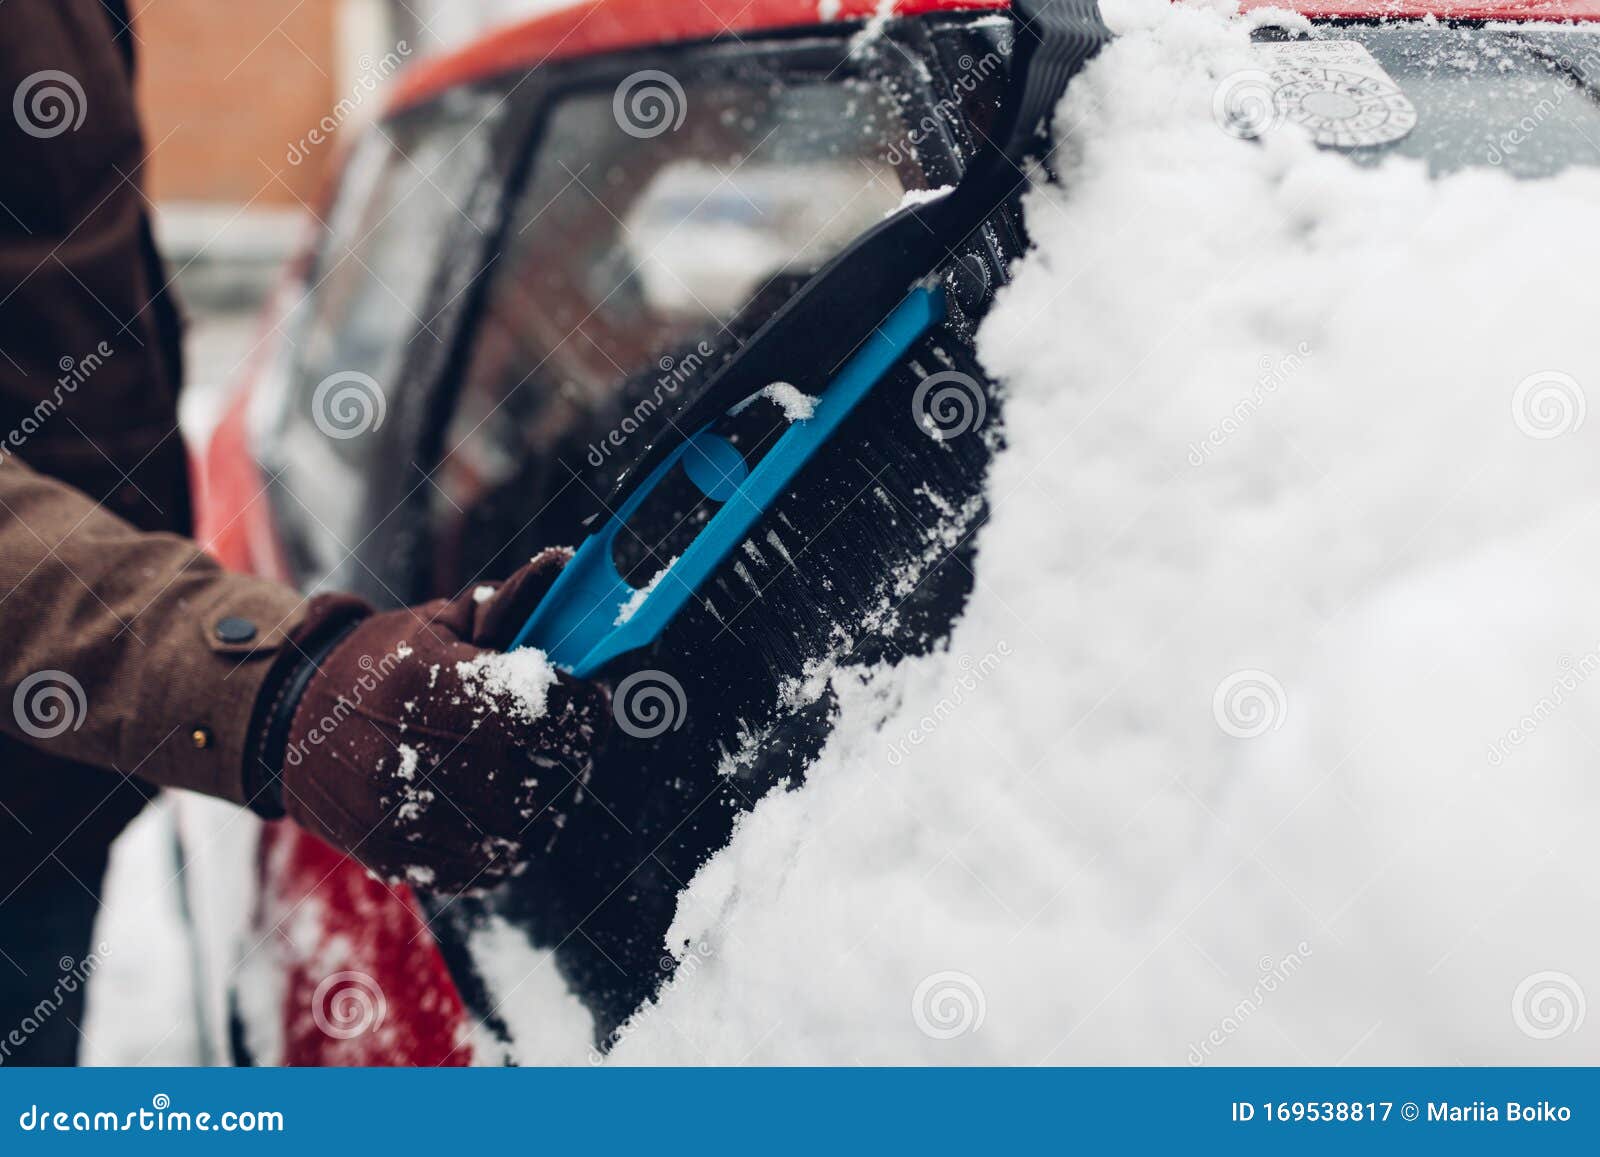 Brosses à neige - Automobile